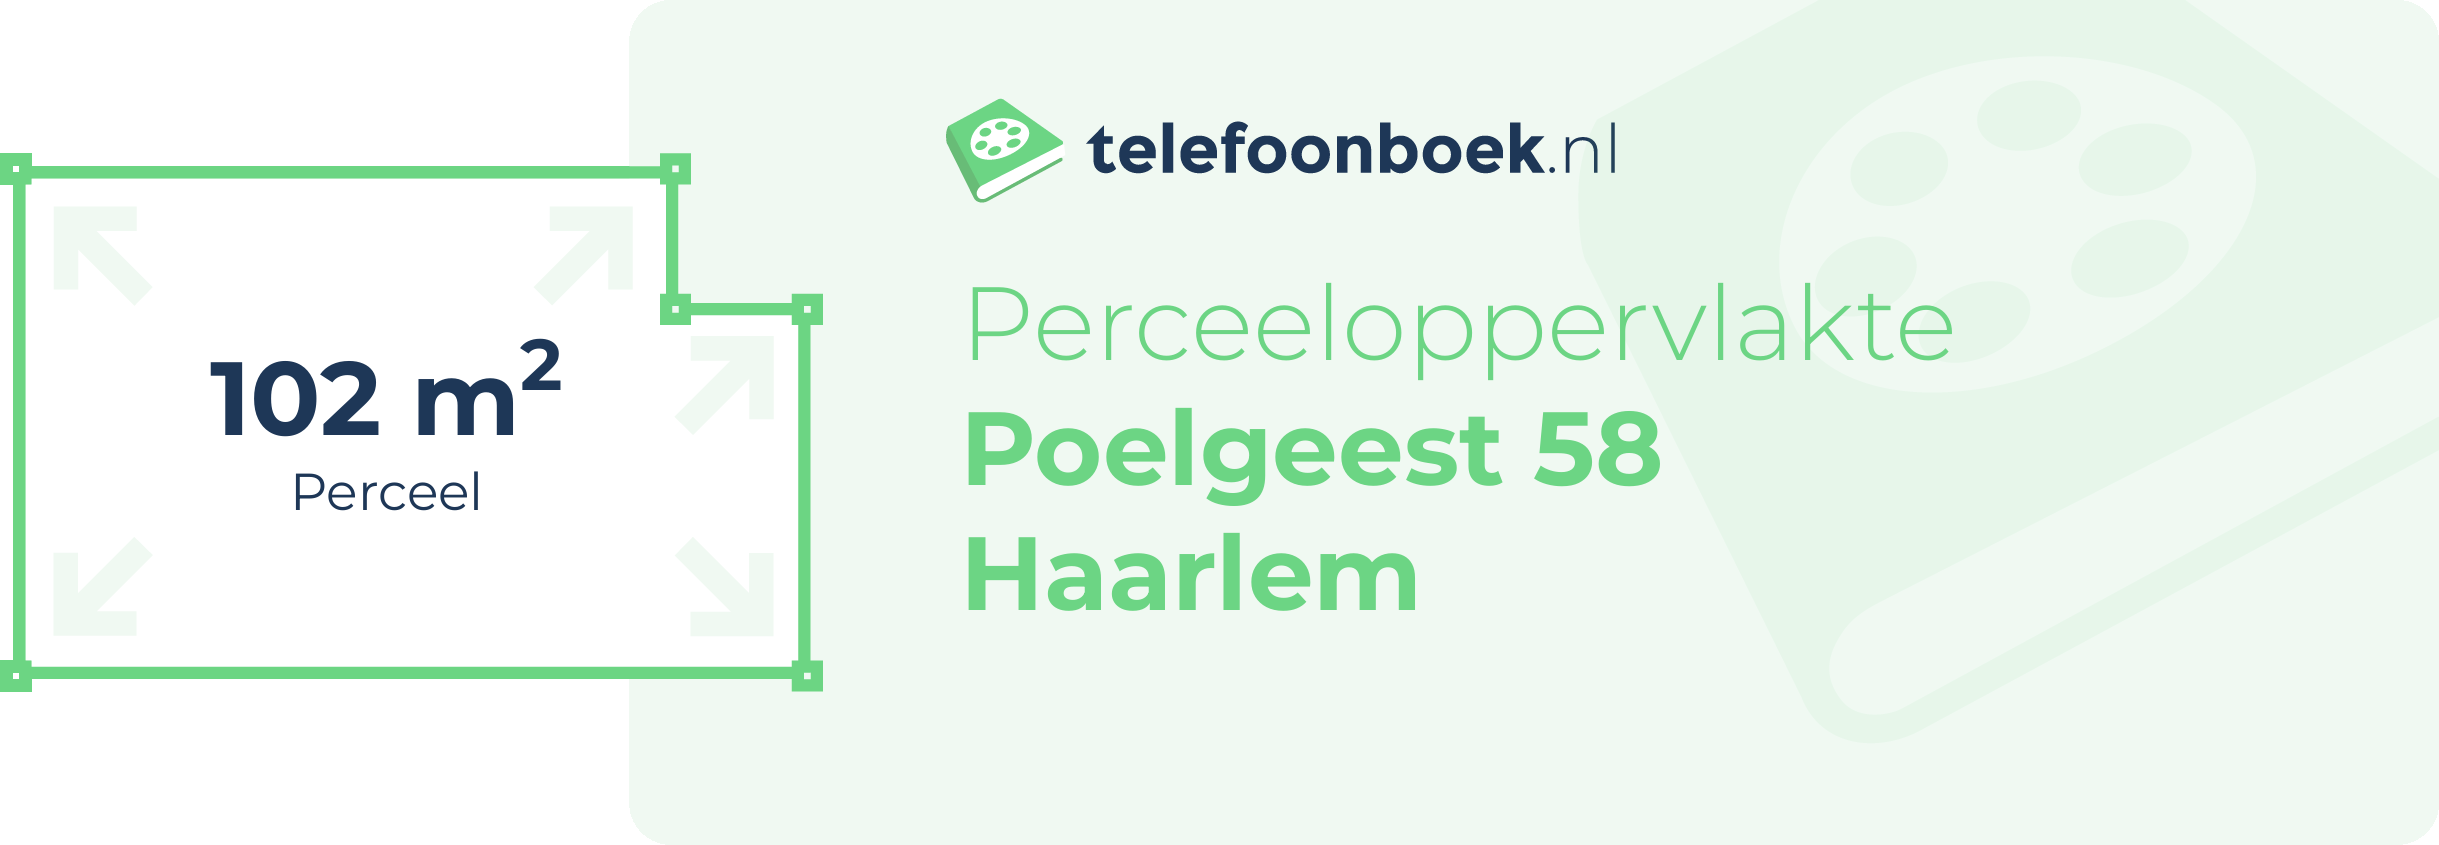 Perceeloppervlakte Poelgeest 58 Haarlem